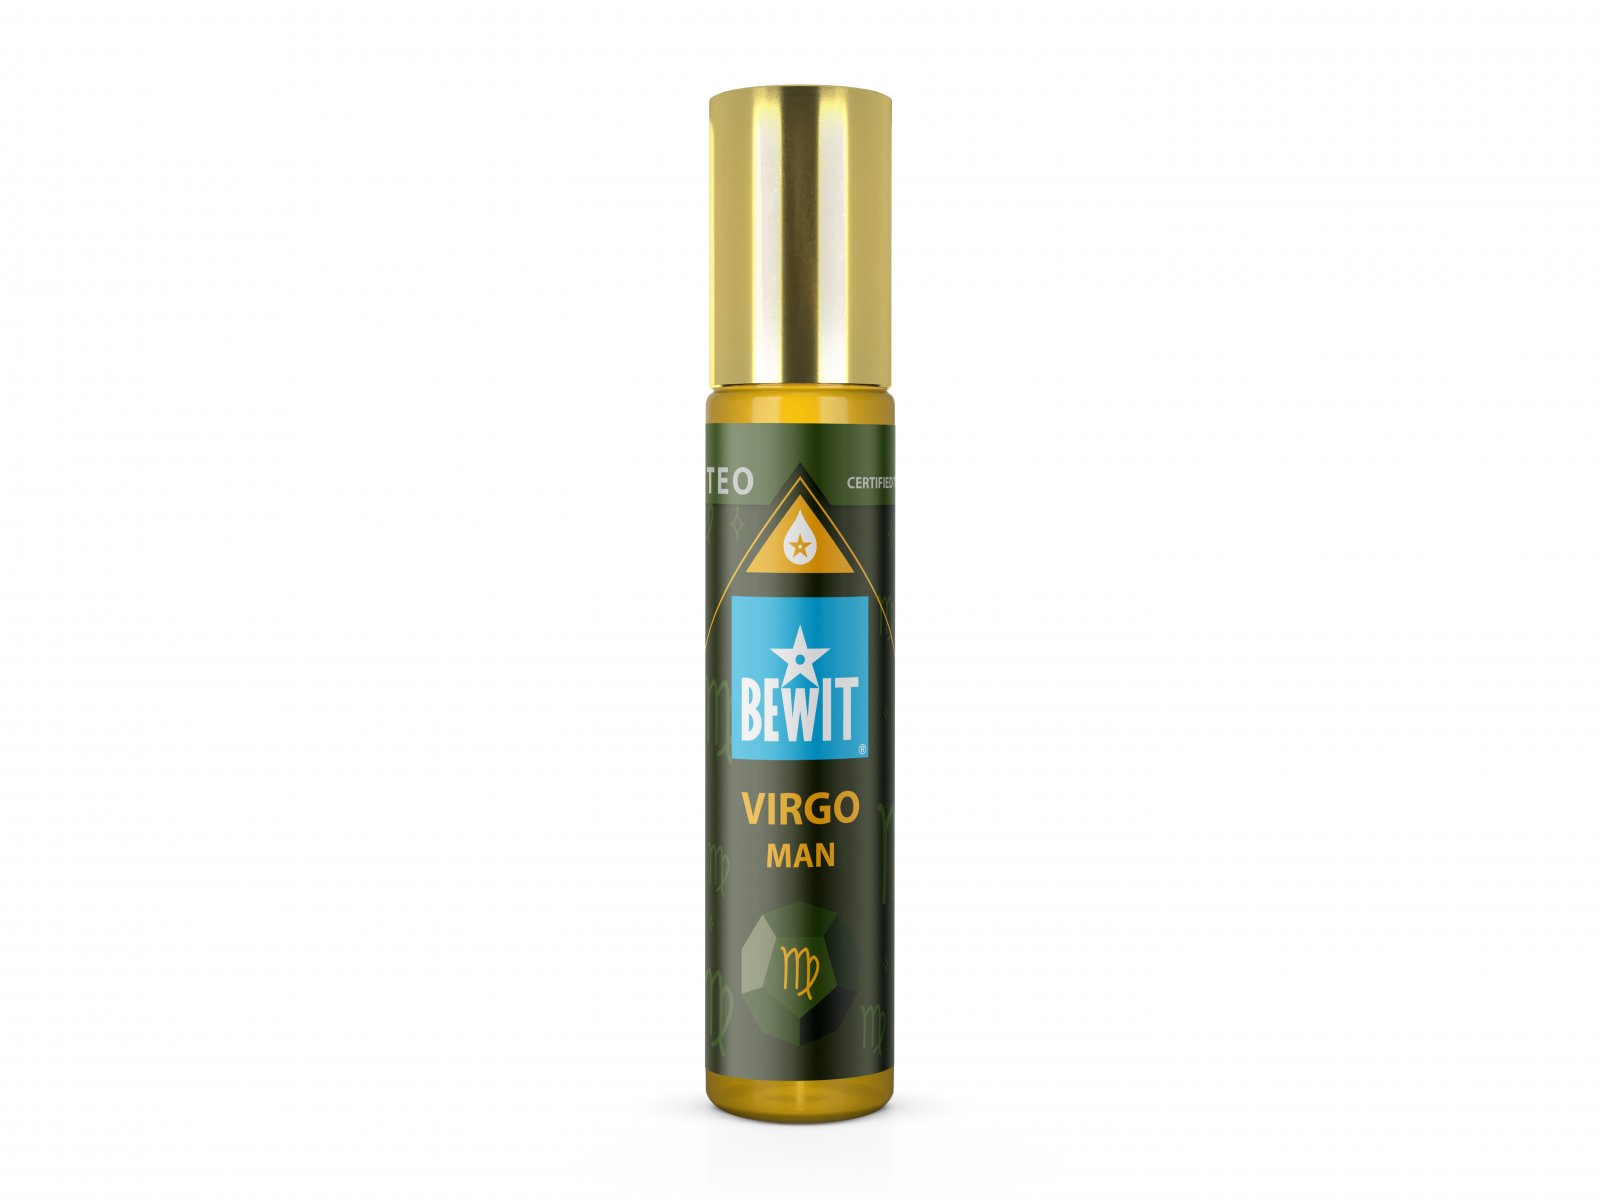 BEWIT® MAN VIRGO (WATER CARRIER) - Men's roll-on oil perfume